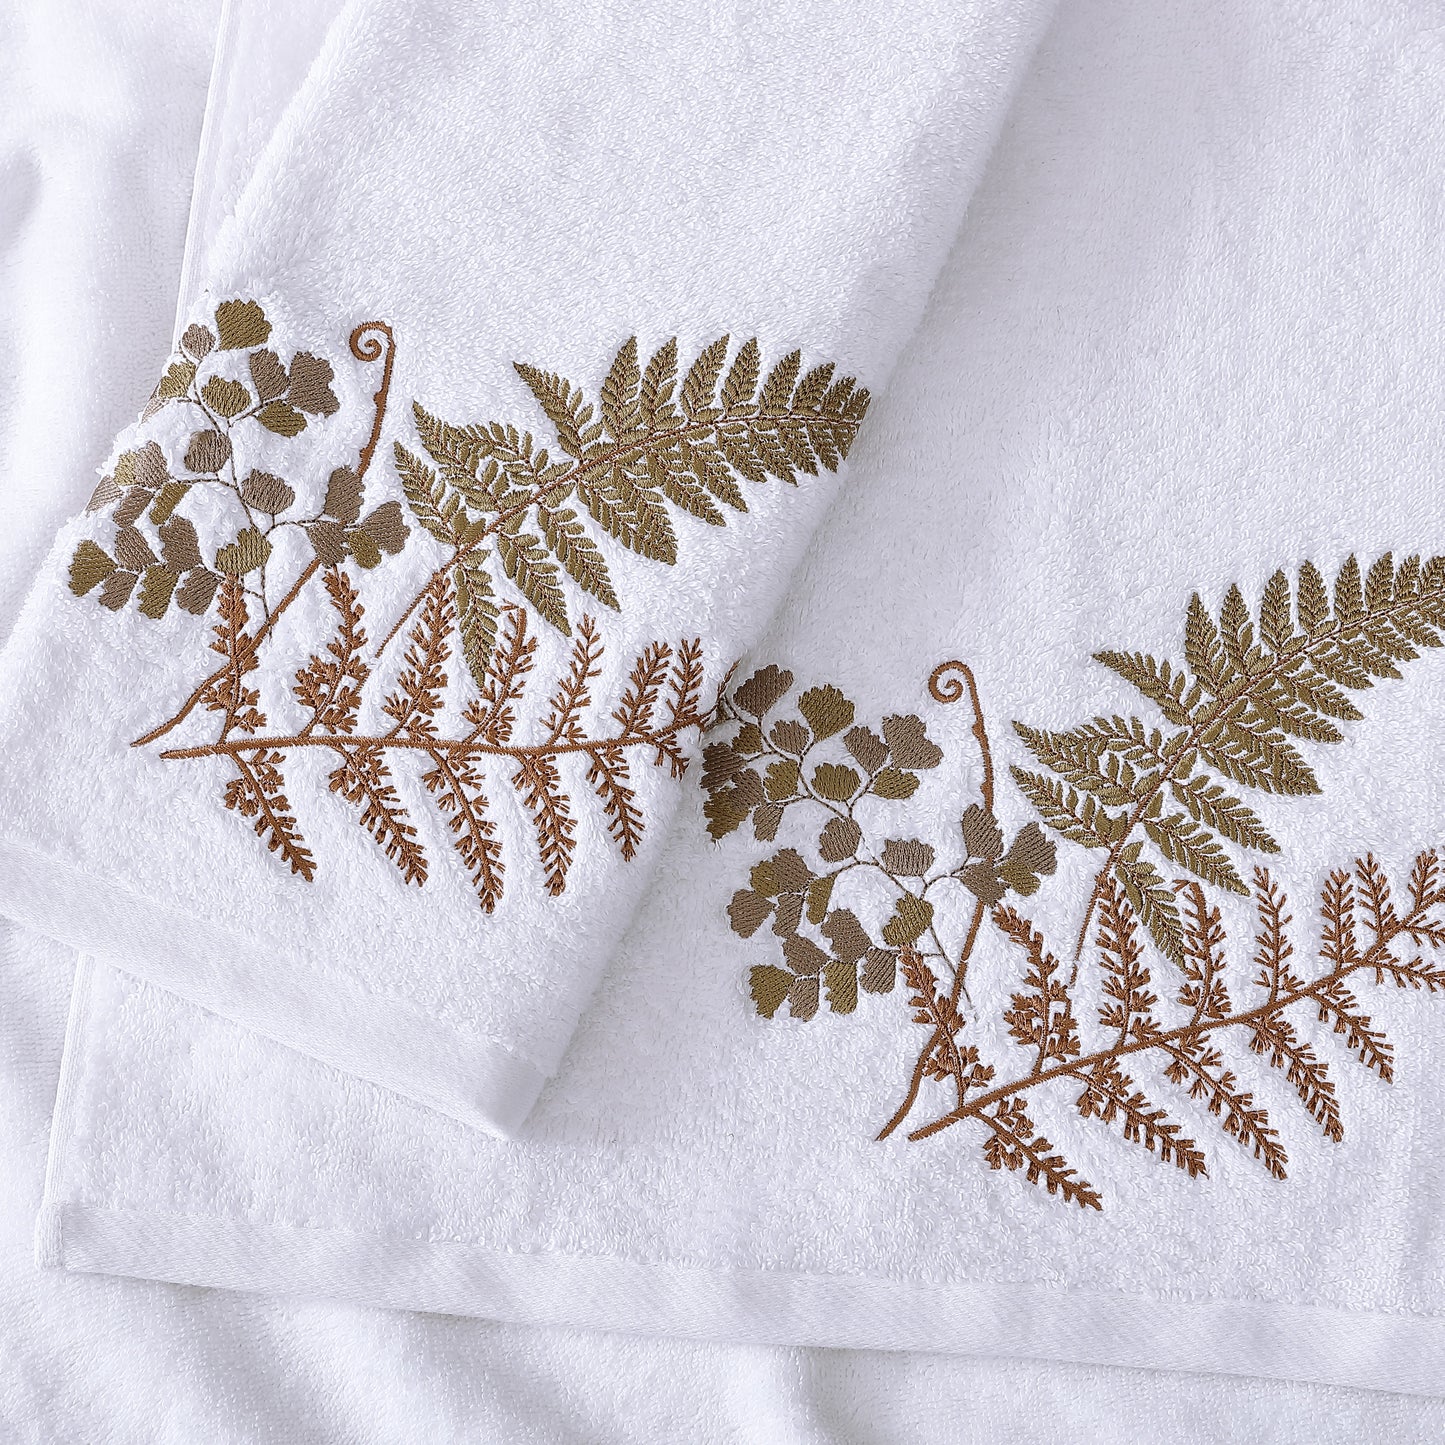 Michael Aram Fern Embroidered Guest Towel Set